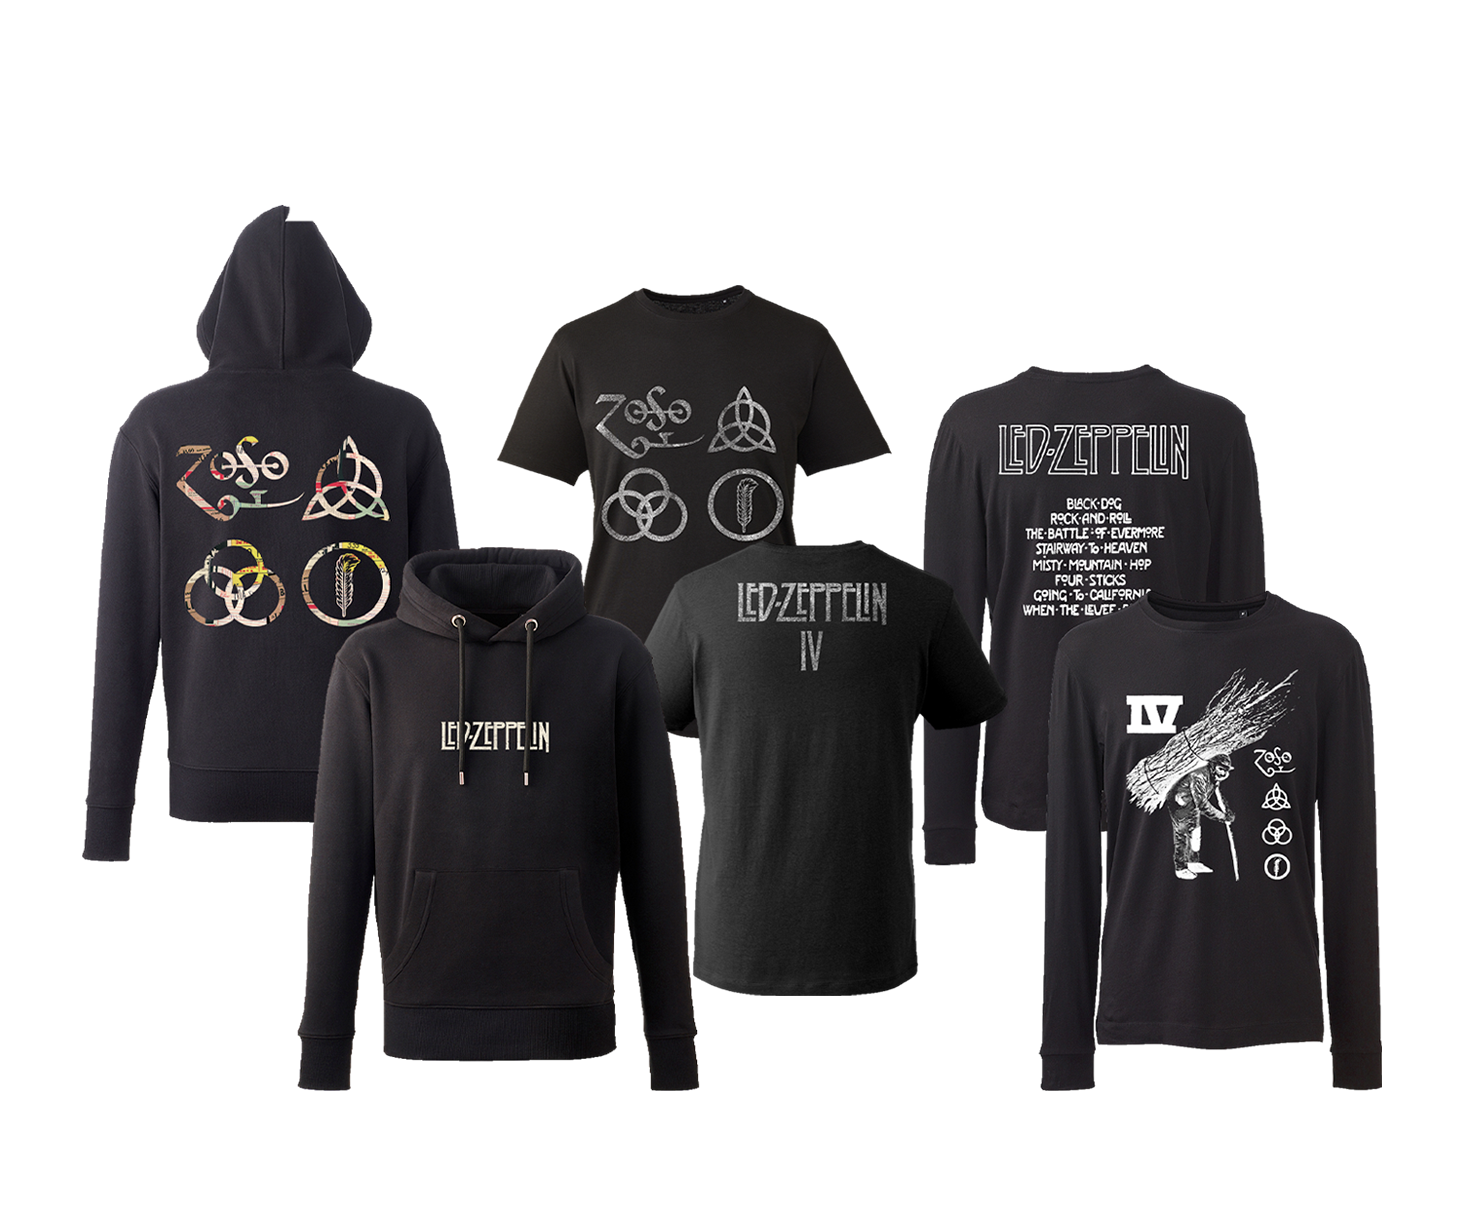 Led Zeppelin - New Japanese Tour Items  Online Now